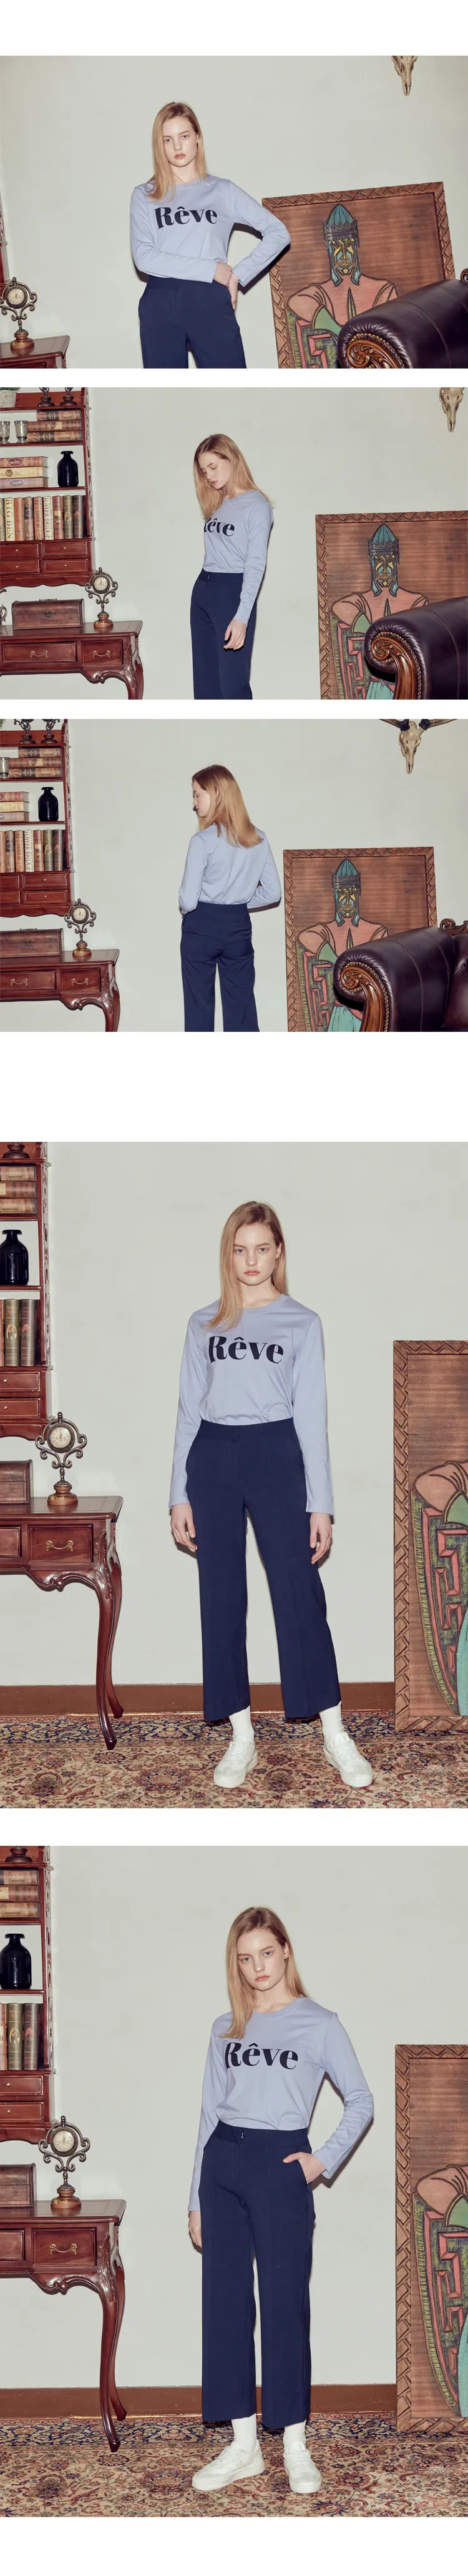 ReveショートスリーブTシャツ(オレンジ) | 詳細画像3